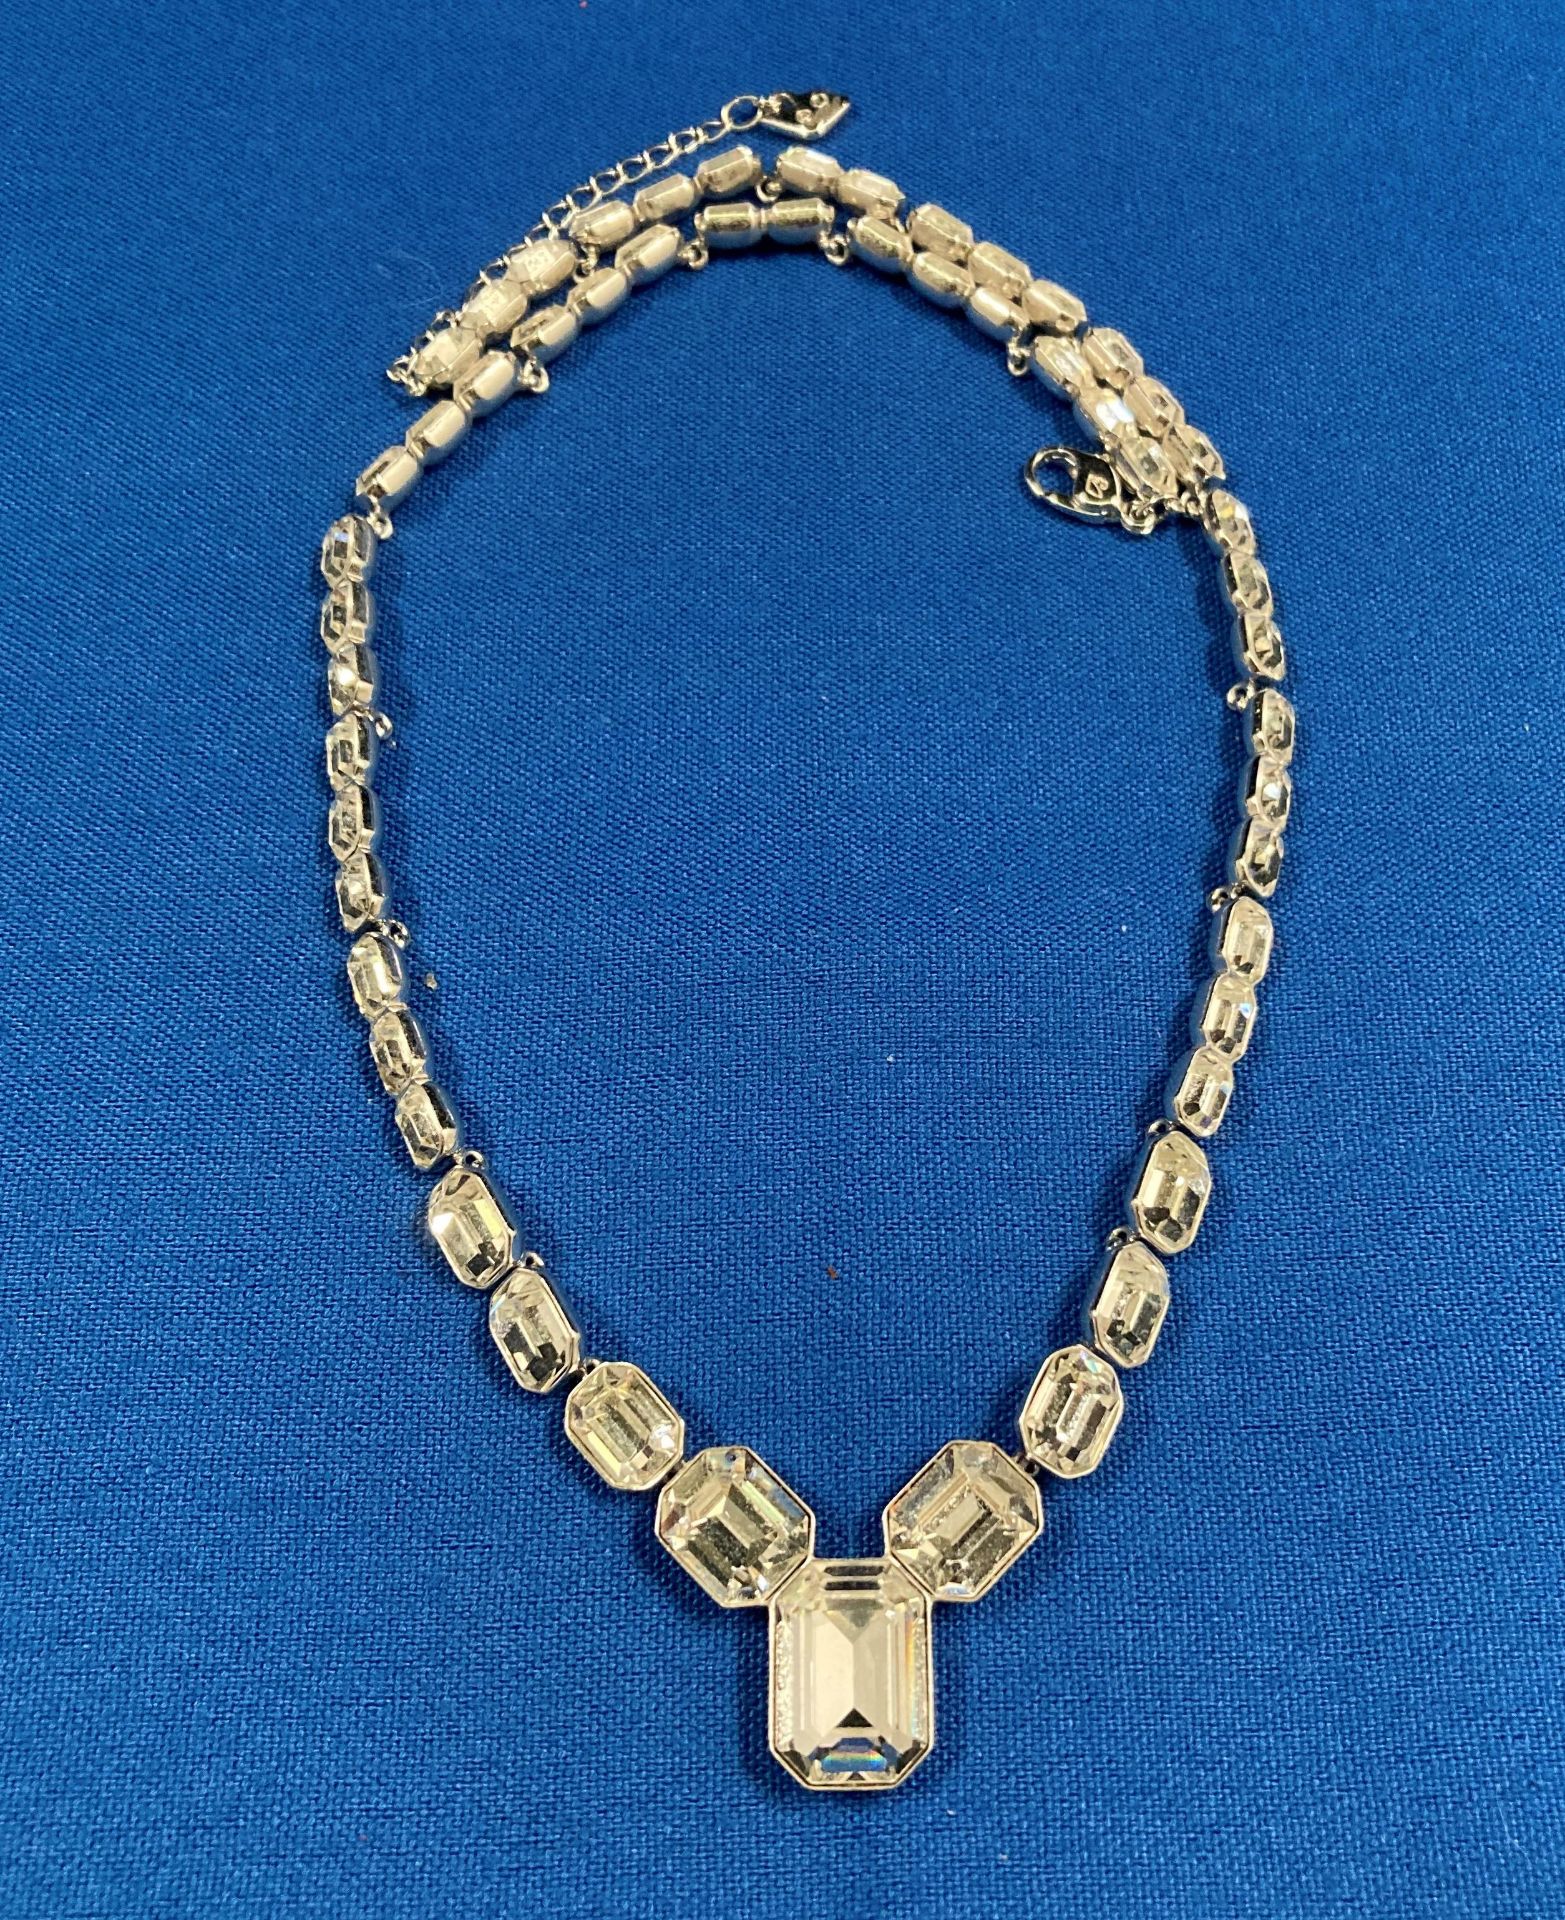 A Swarovski ladies crystal necklace,